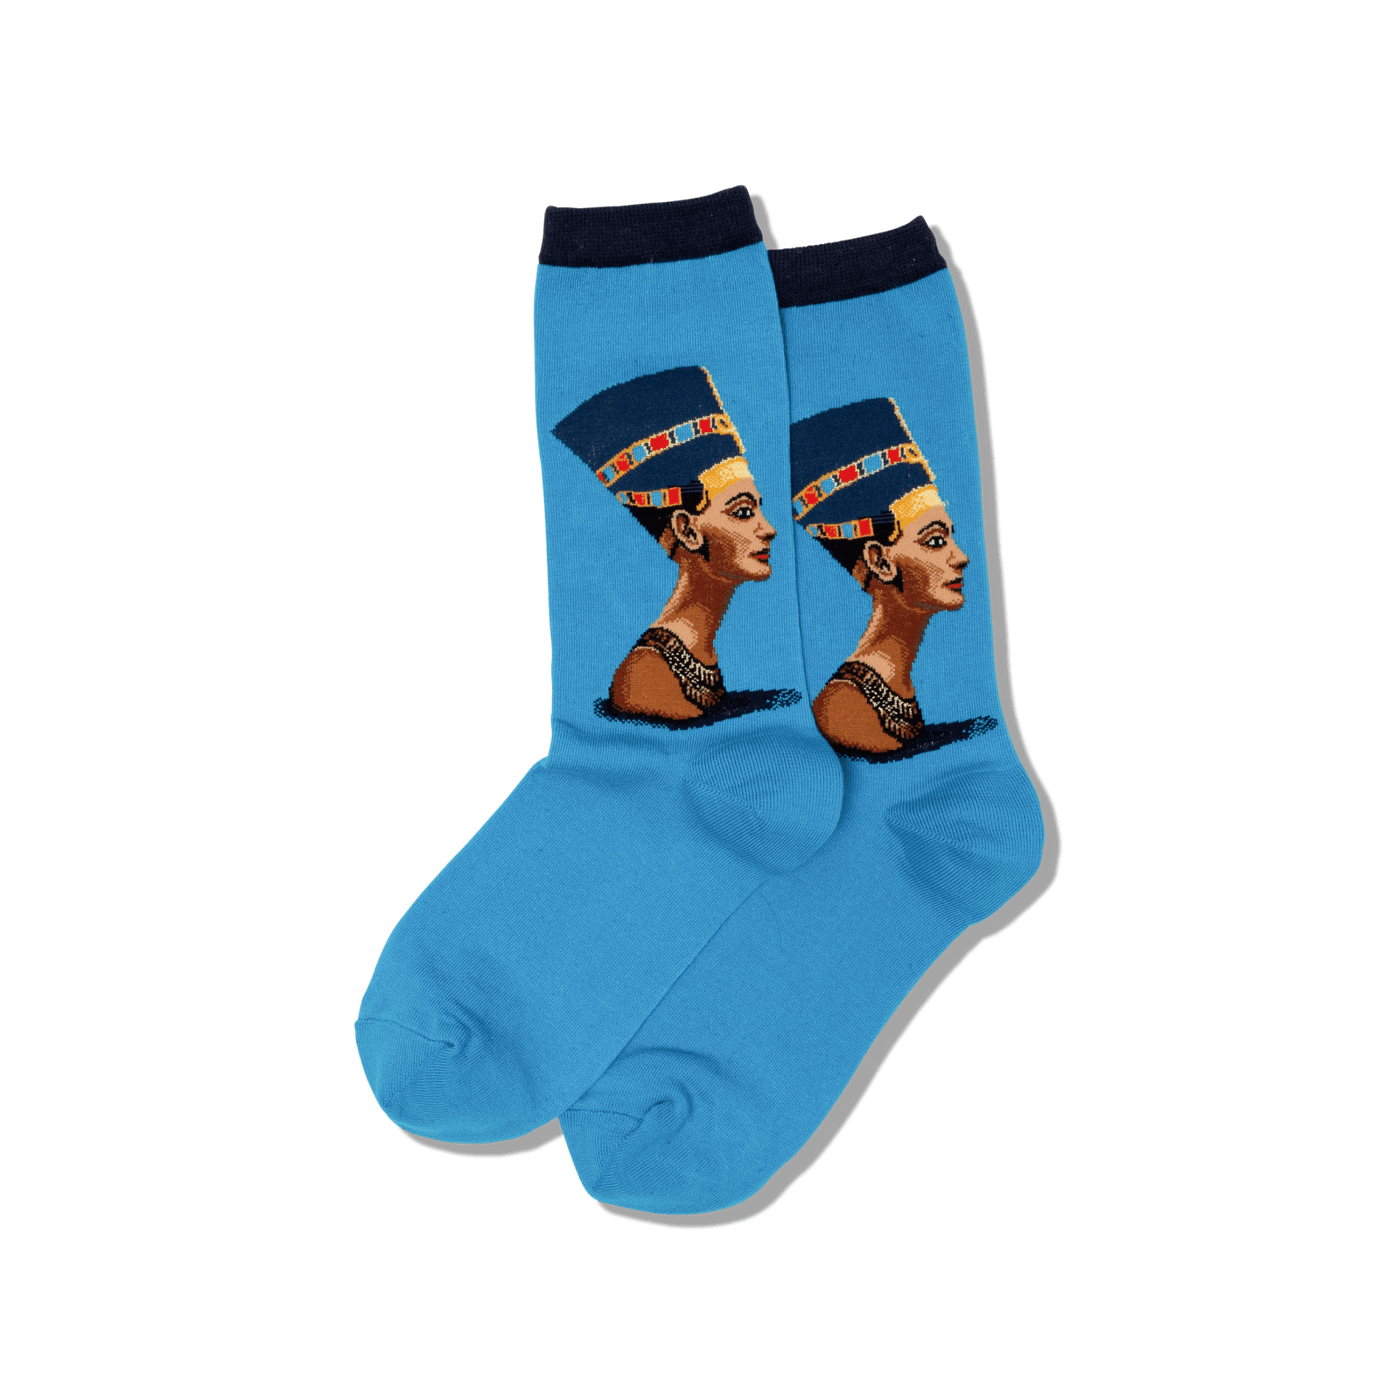 "NEFERTITI " Cotton Socks by Hot Sox - Medium